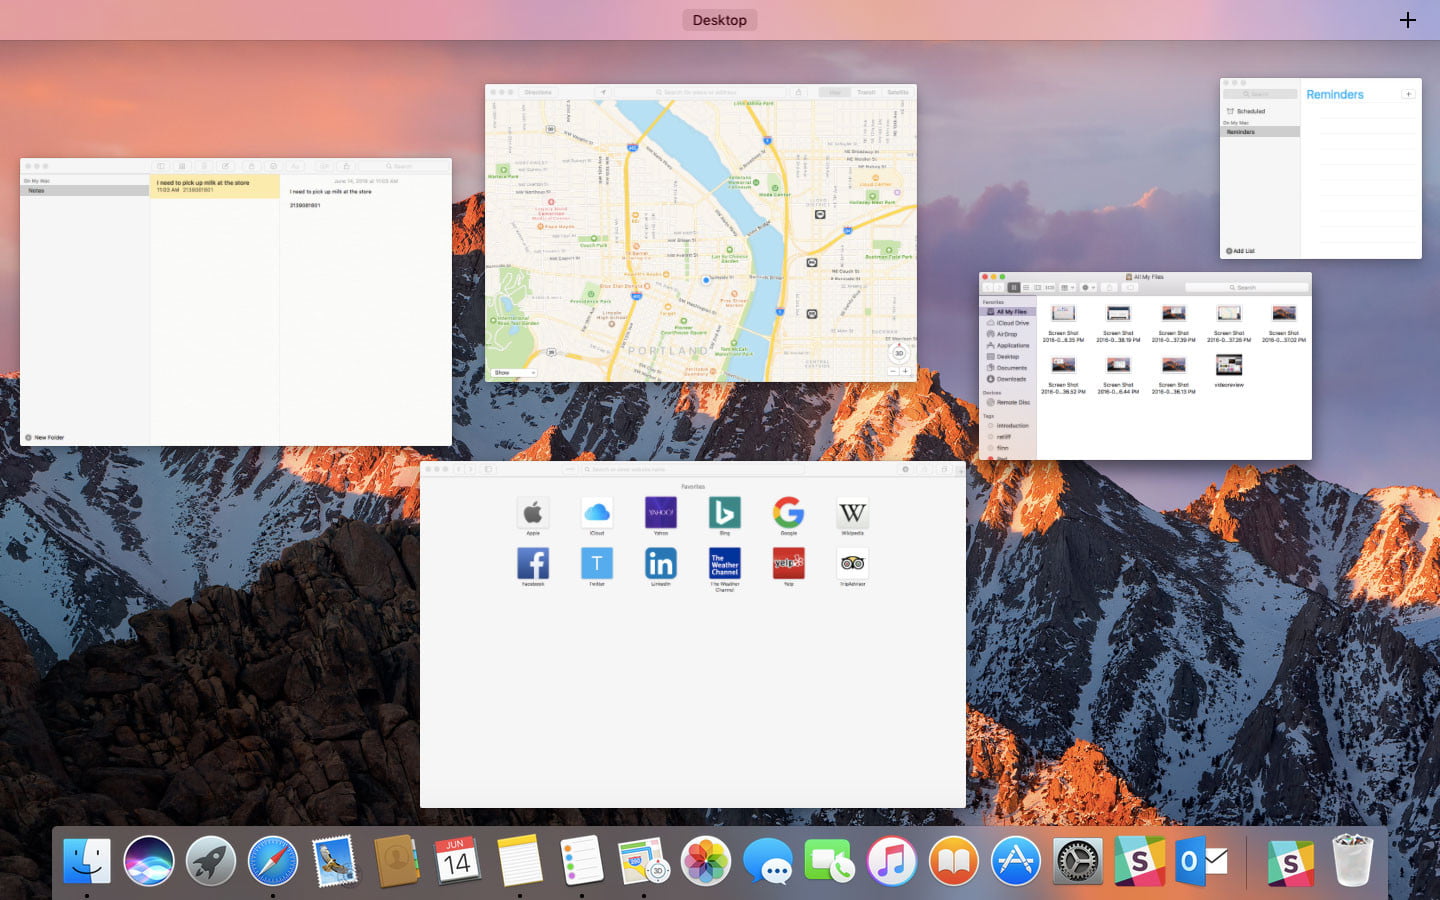 mac os dashboard widgets on desktop